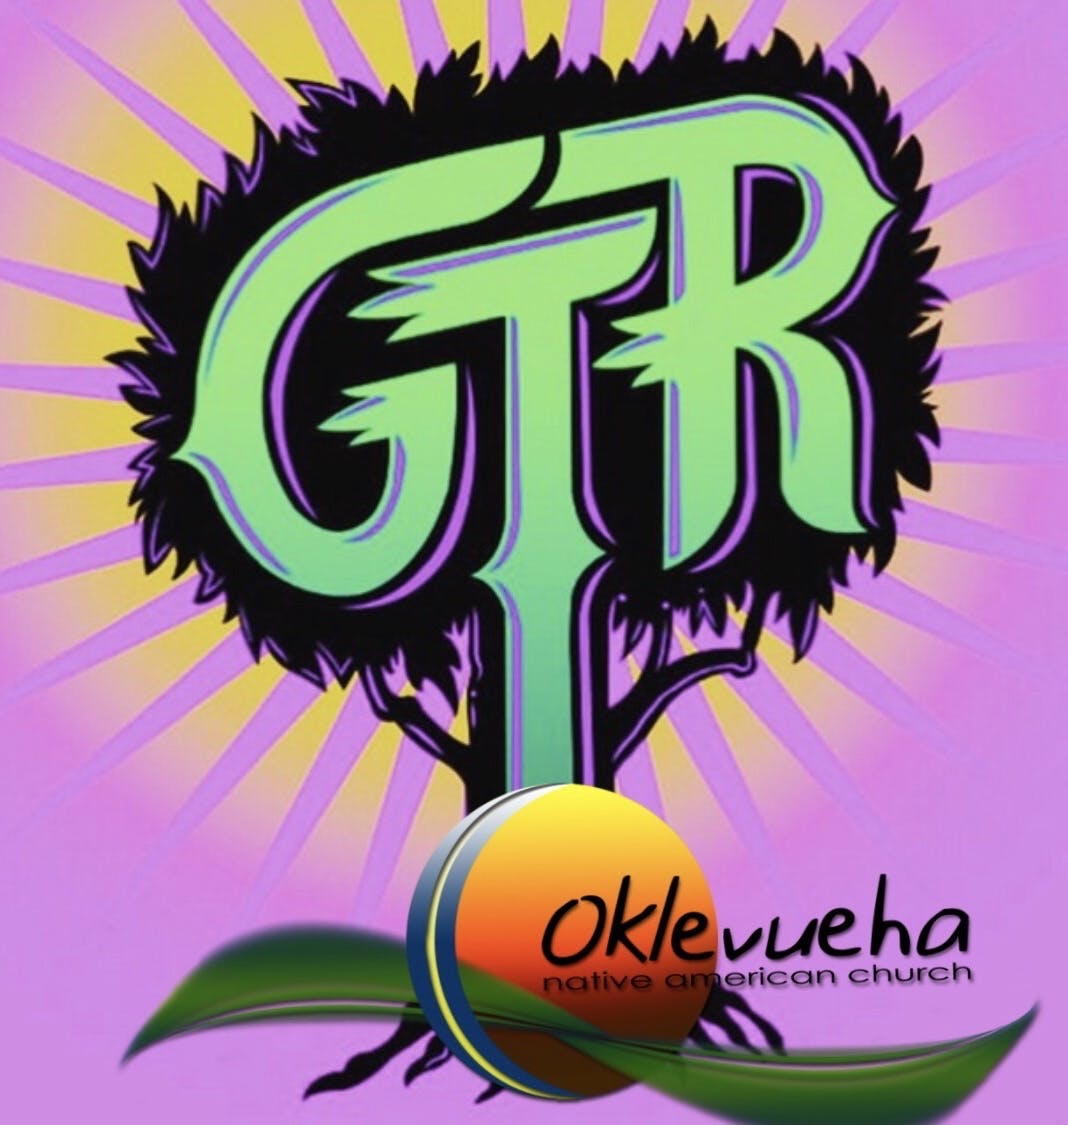 GTR- Green Tree Remedy ONAC -Fullerton - Medical Marijuana Doctors - Cannabizme.com